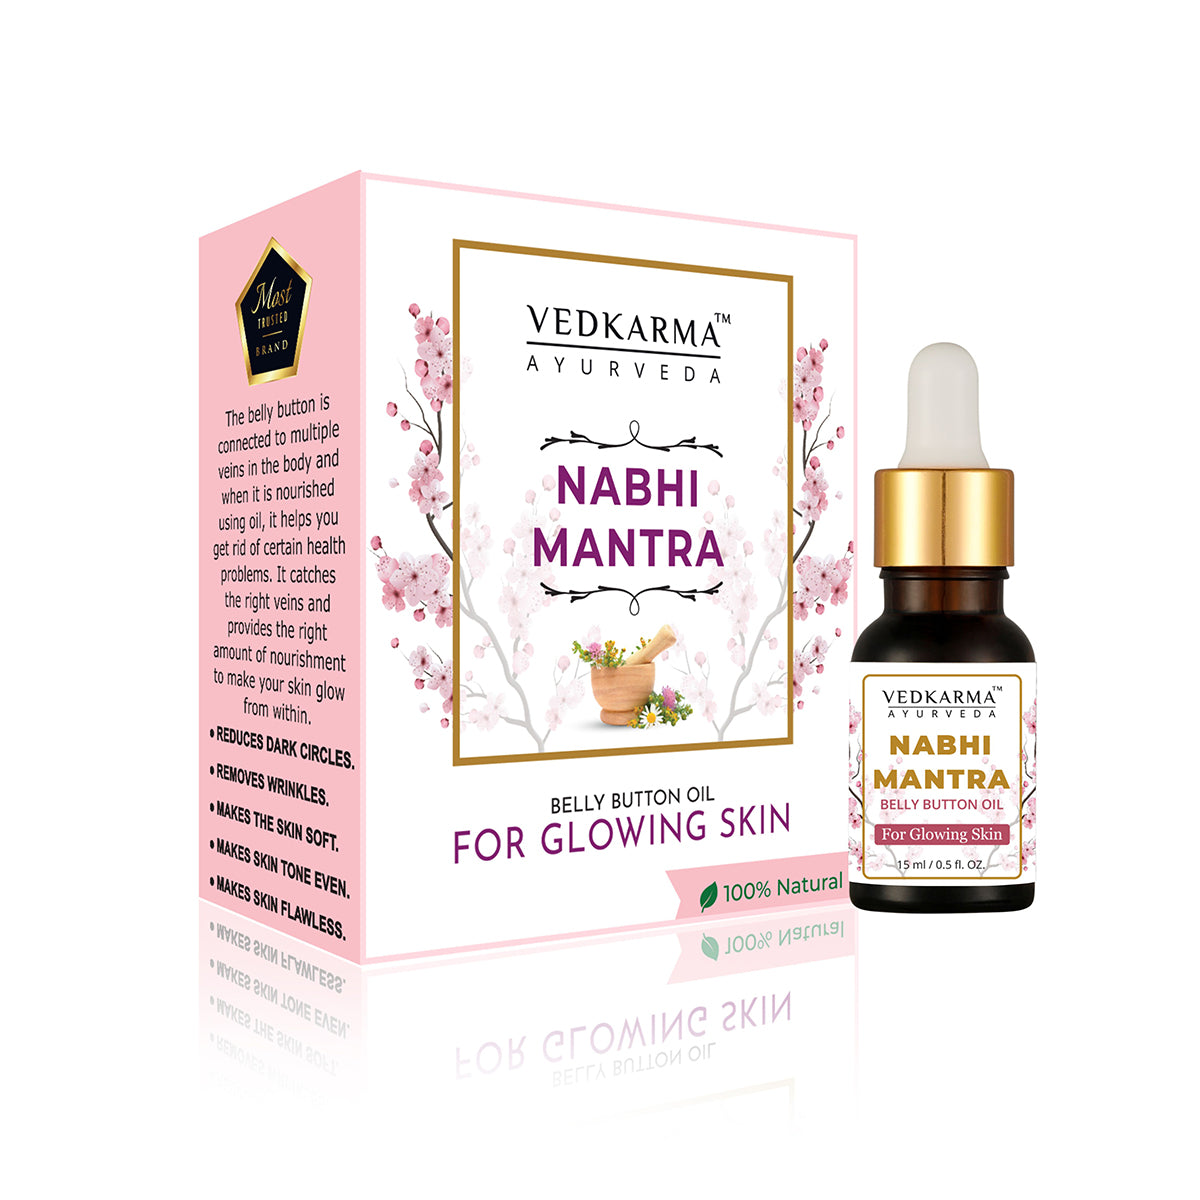 Vedkarma Nabhi Mantra Belly Button Oil For Glowing Skin - VEDKARMA